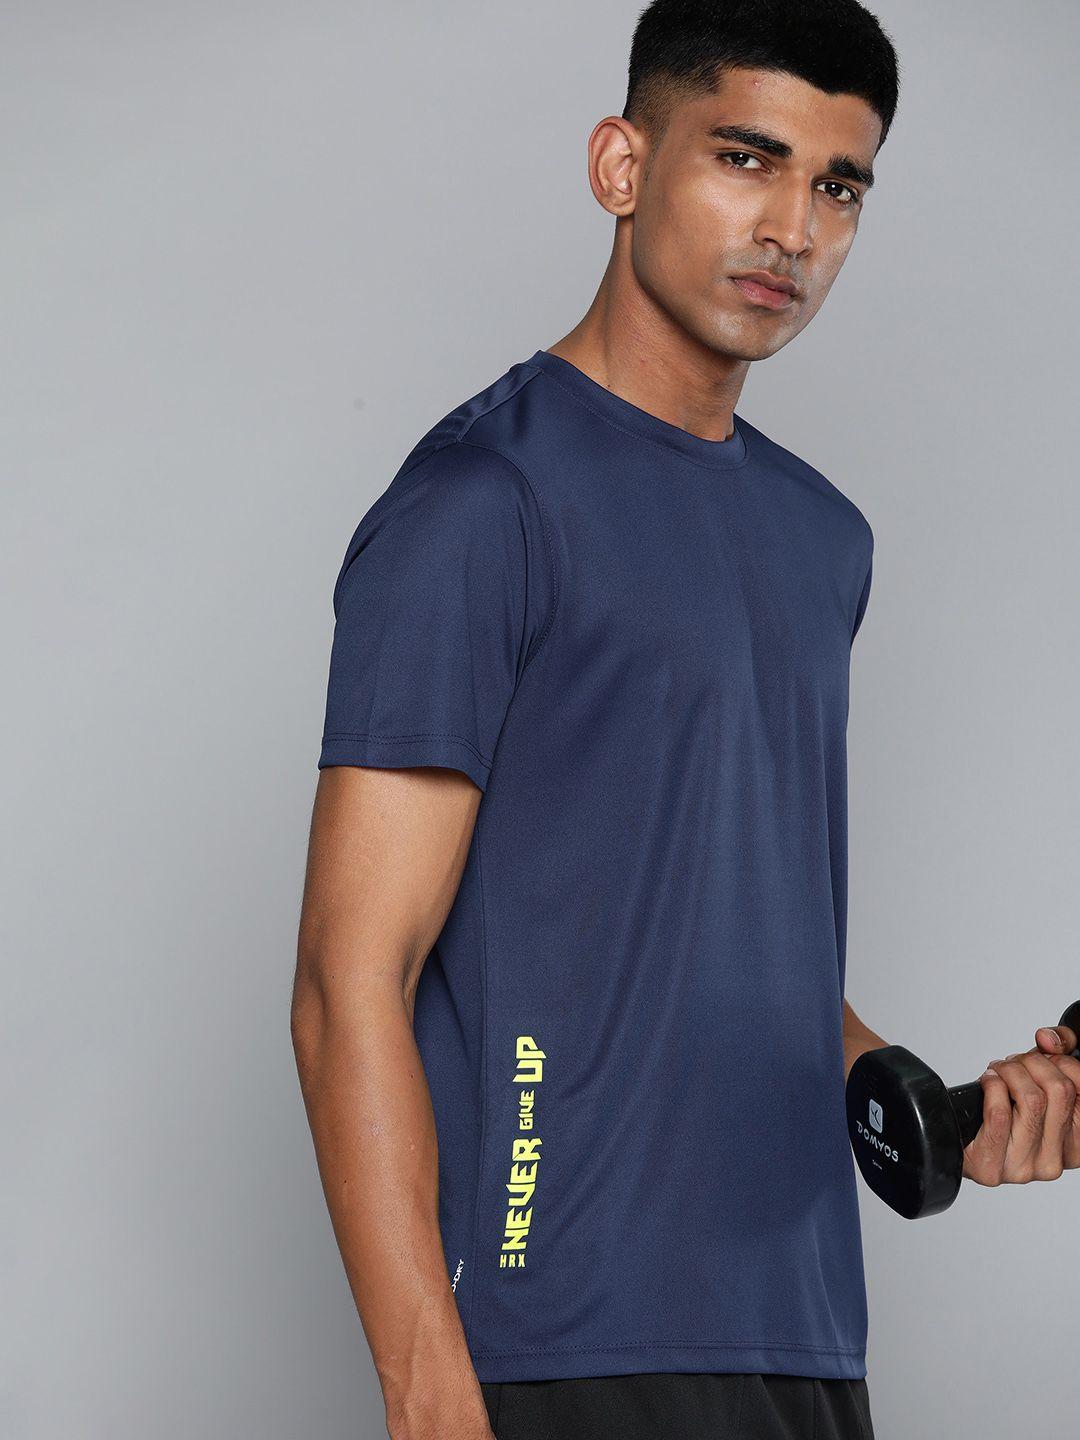 hrx-by-hrithik-roshan-rapid-dry-training-t-shirt